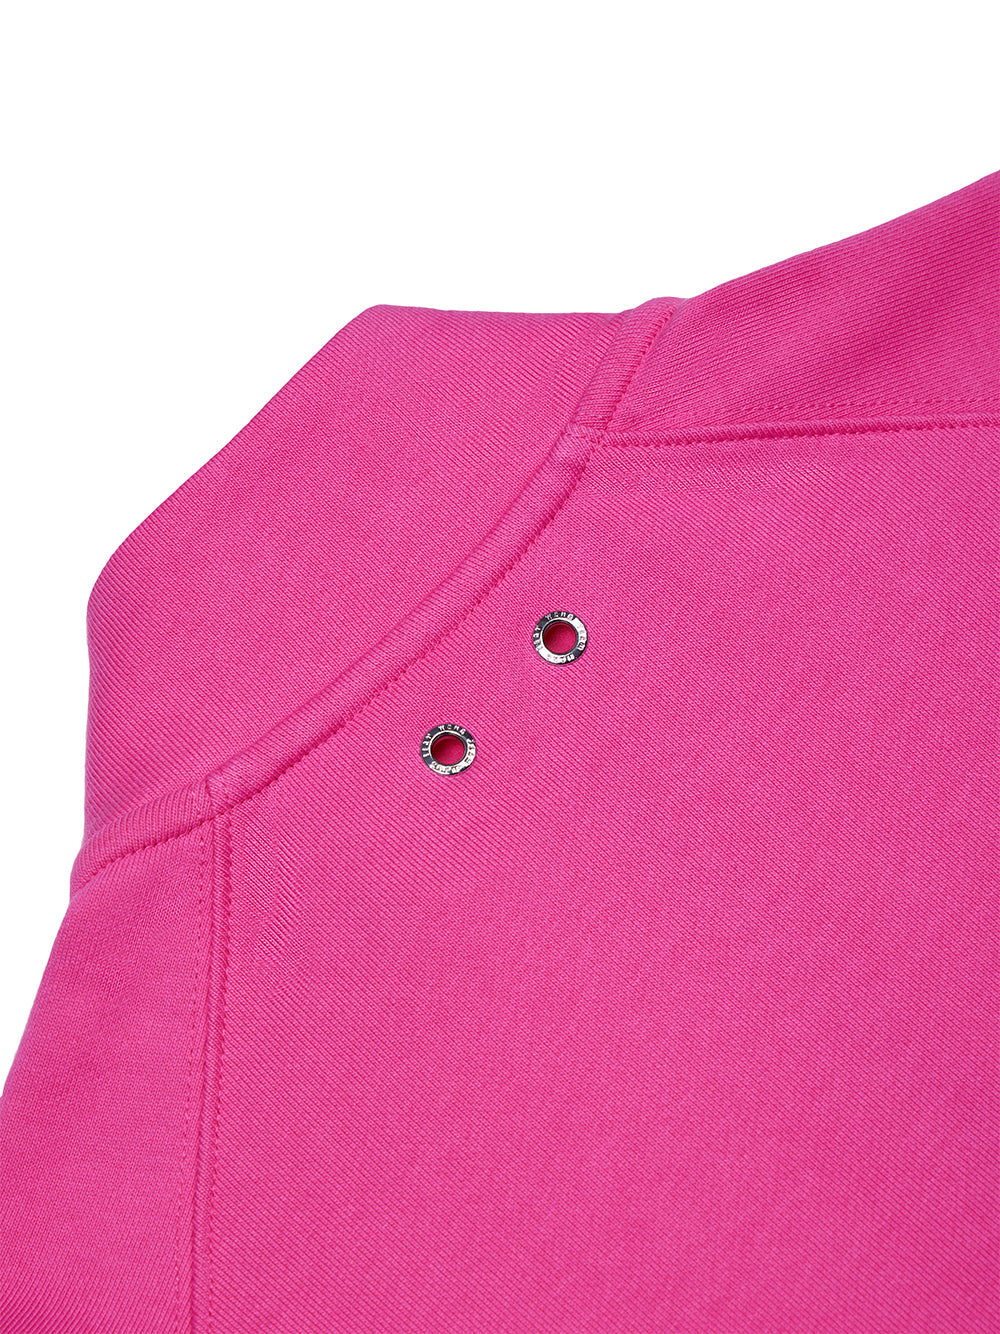 TEAM WANG design x CHUANG ASIA Zip-Up Casual Jacket (Rose Red)